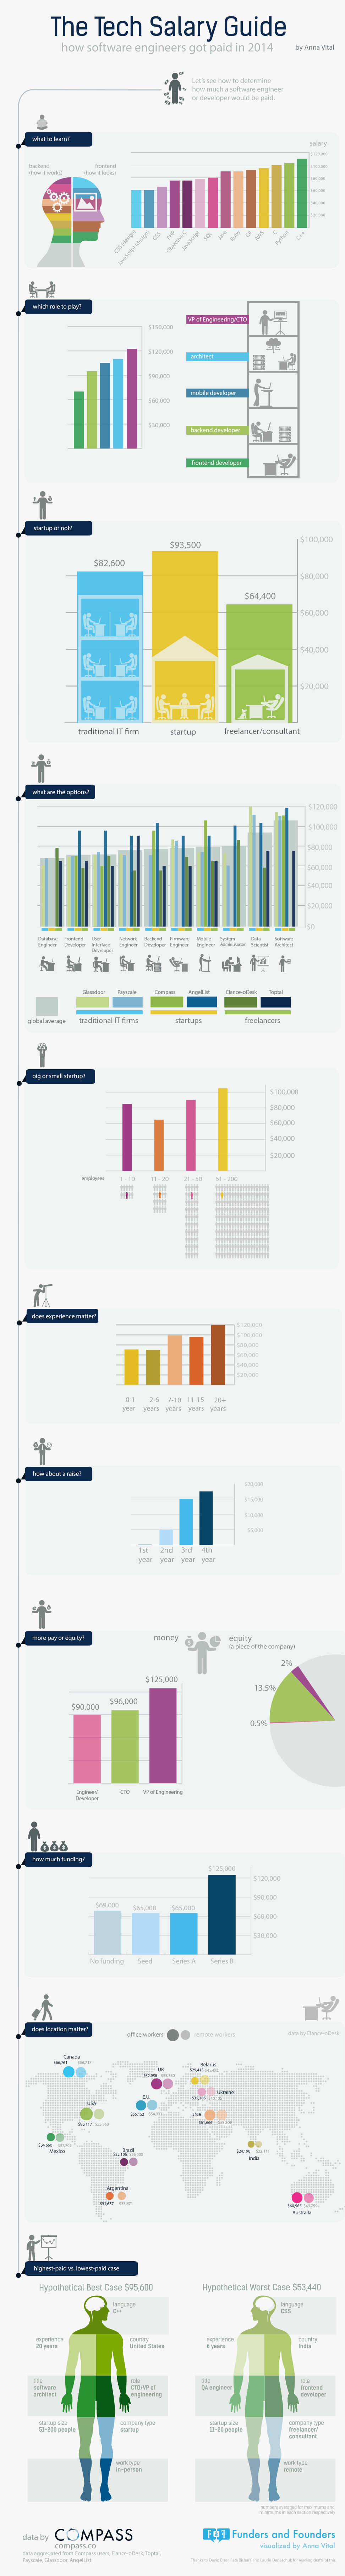 software engineer salary 2014 - infographic